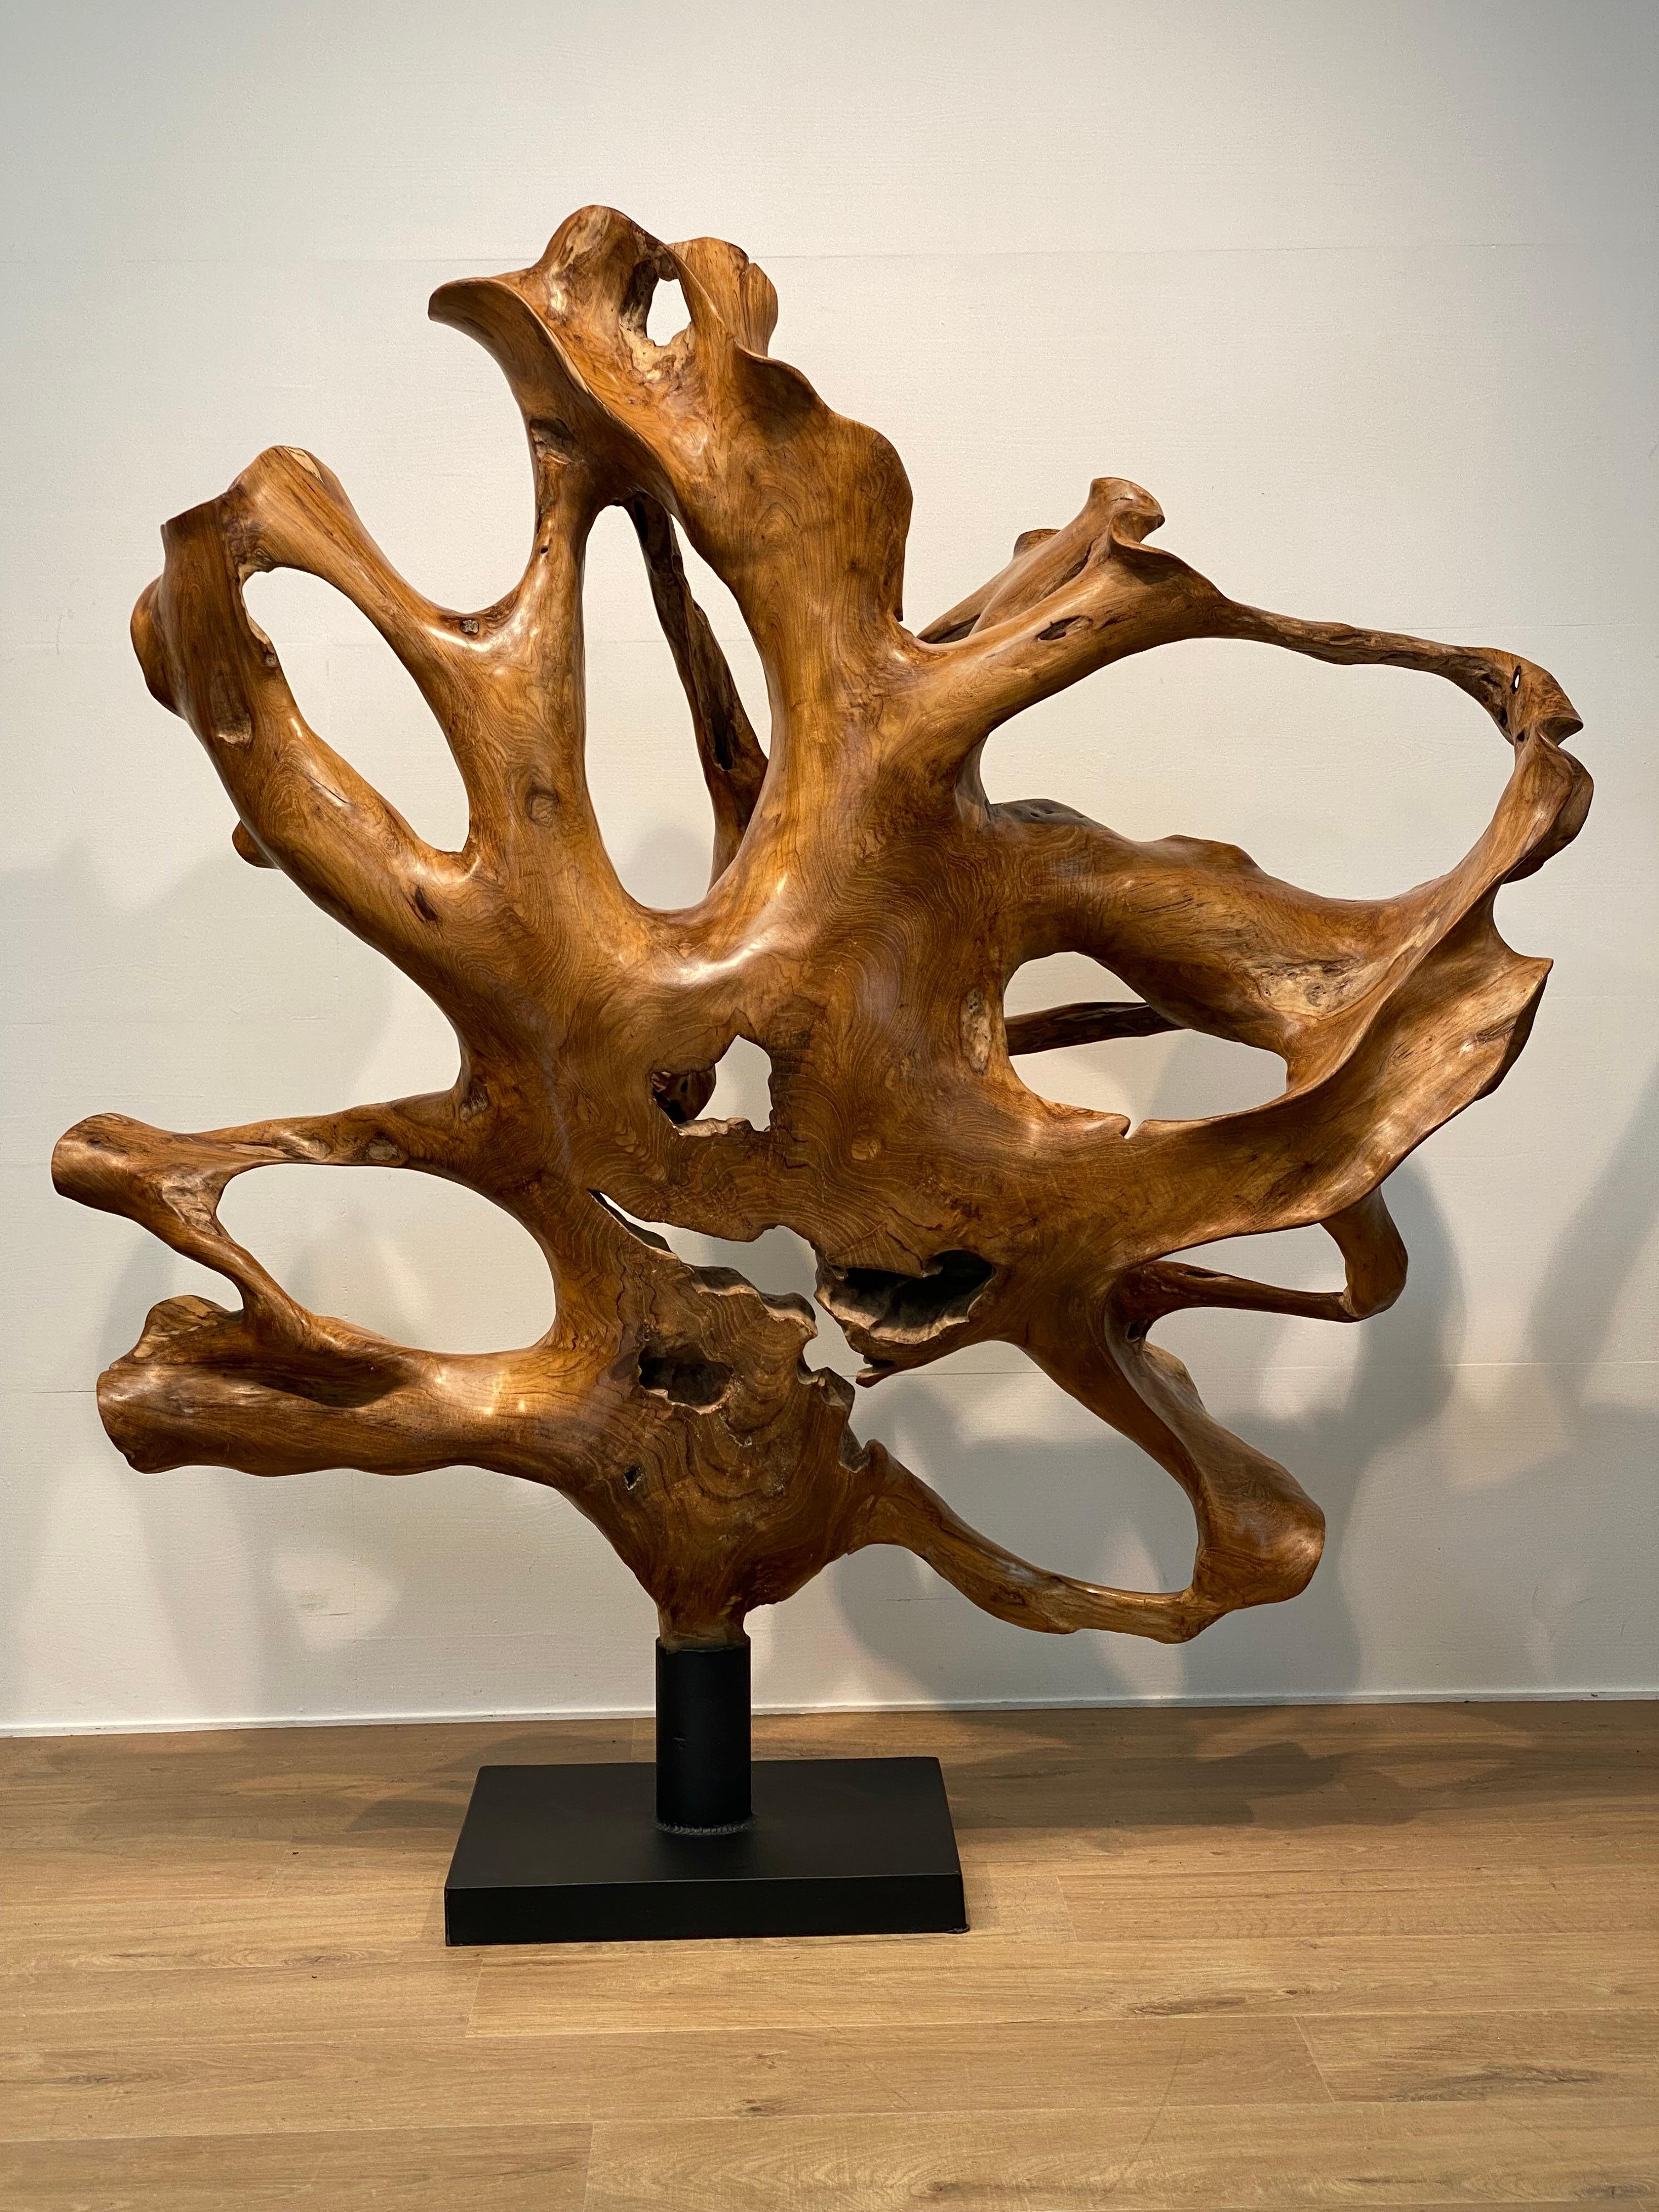 Polished Contemporary, Brutalist Wooden Sculpture For Sale